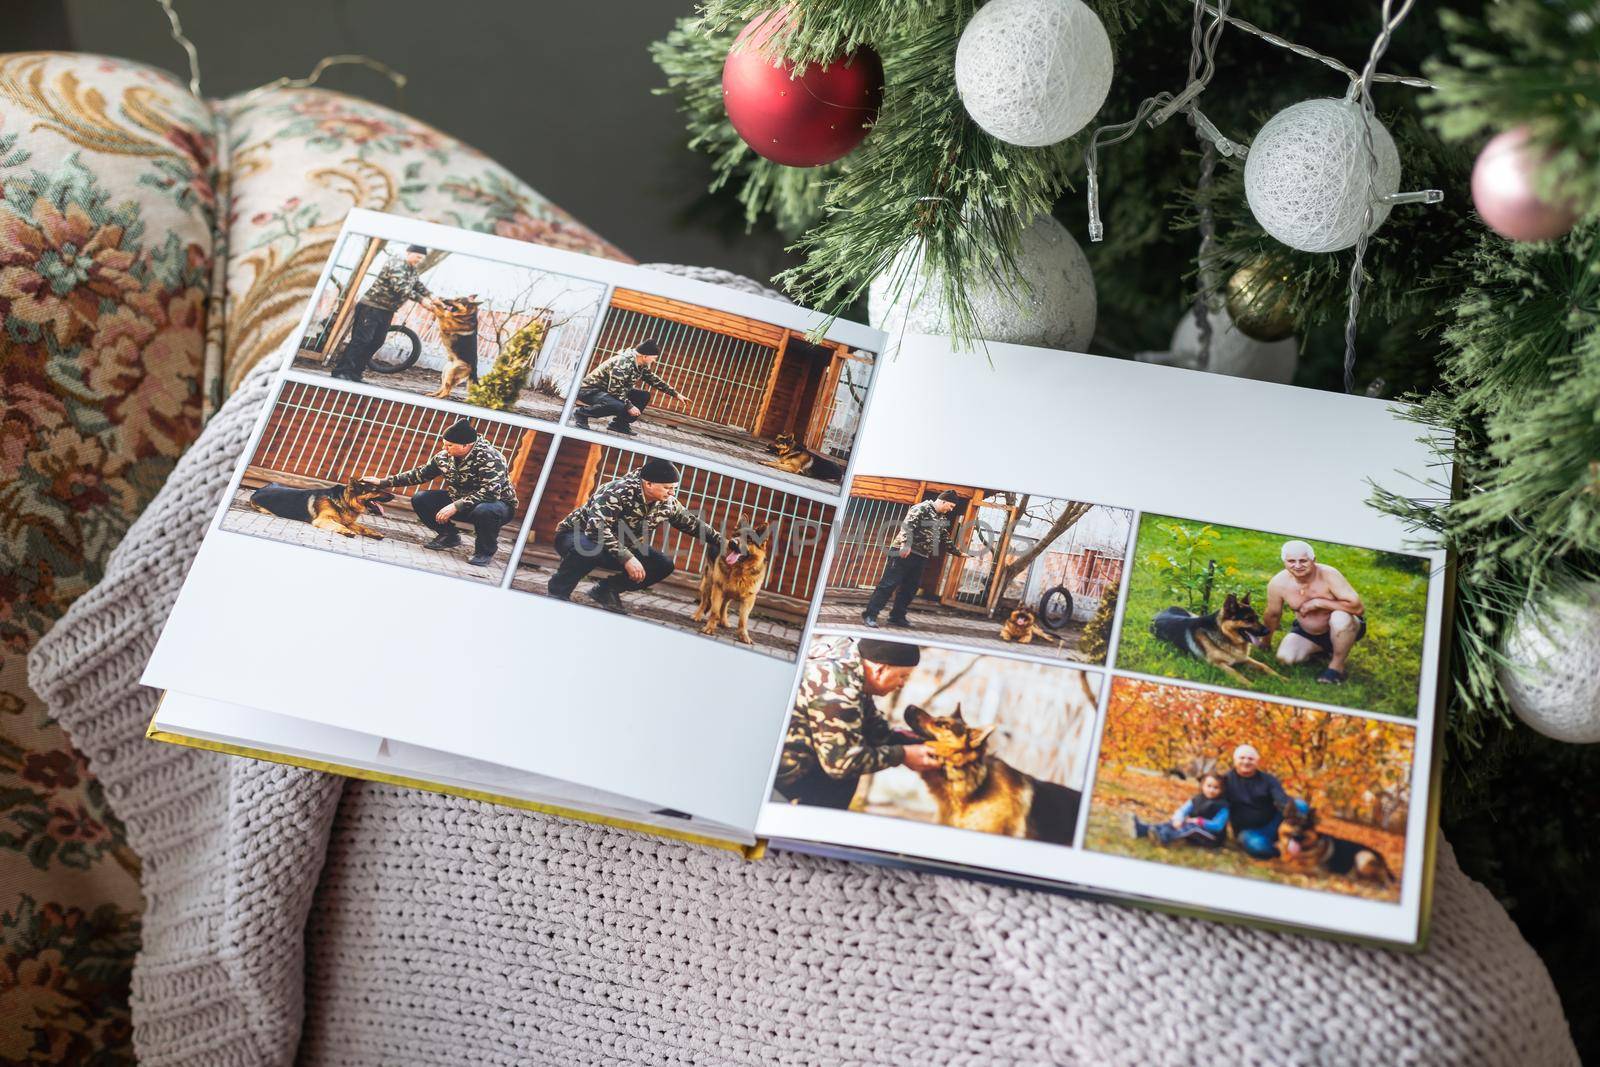 family photo book near the Christmas tree by Andelov13